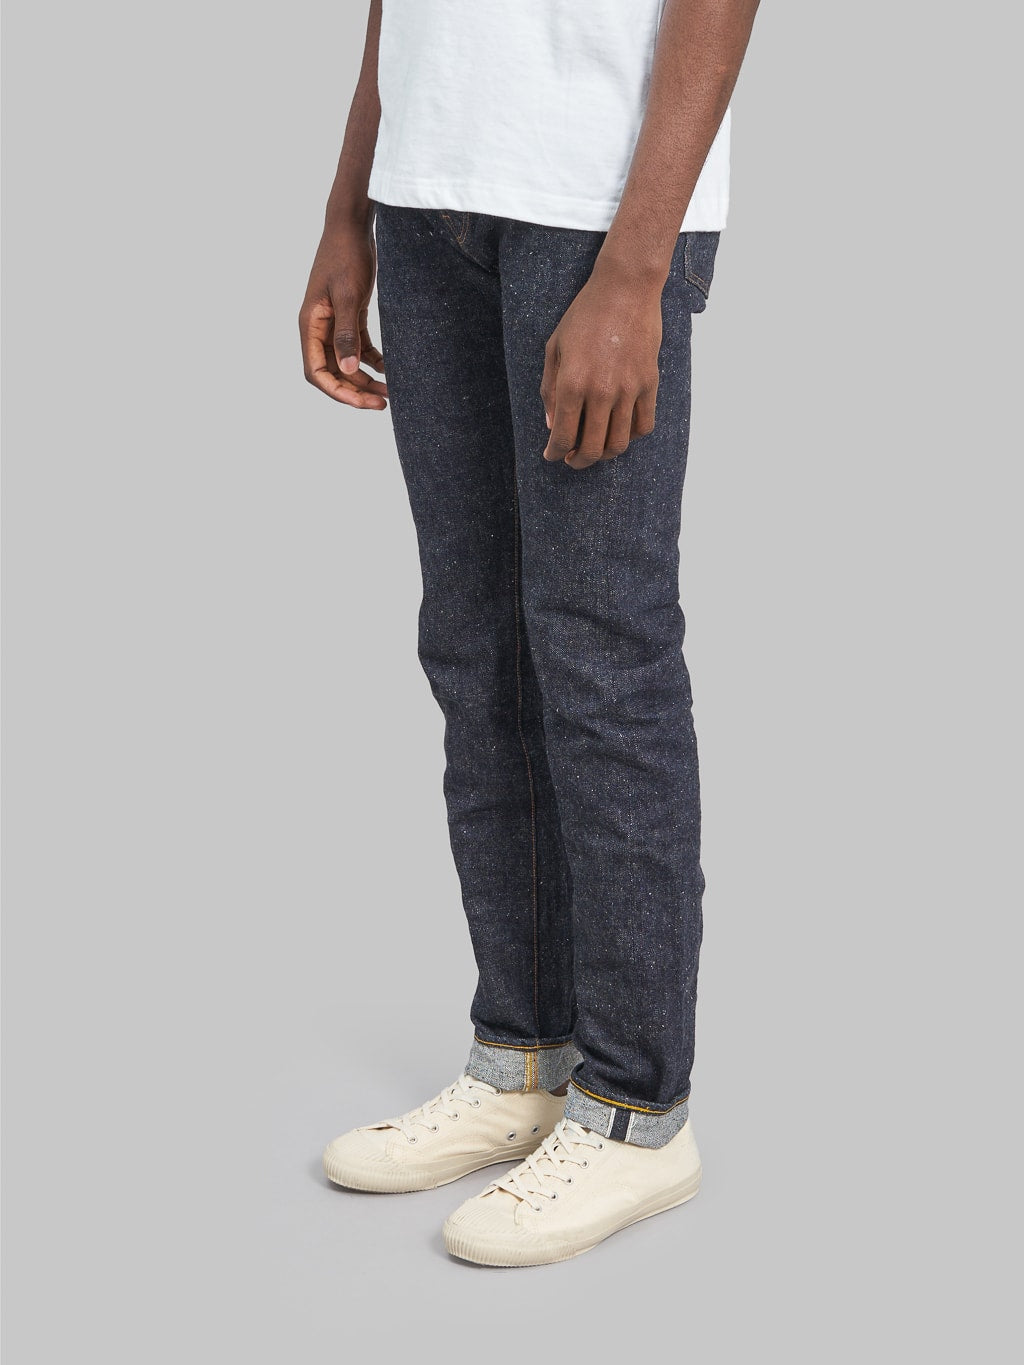 Samurai Jeans S0255XX Ushiwaka 15oz Slim Tapered jeans side